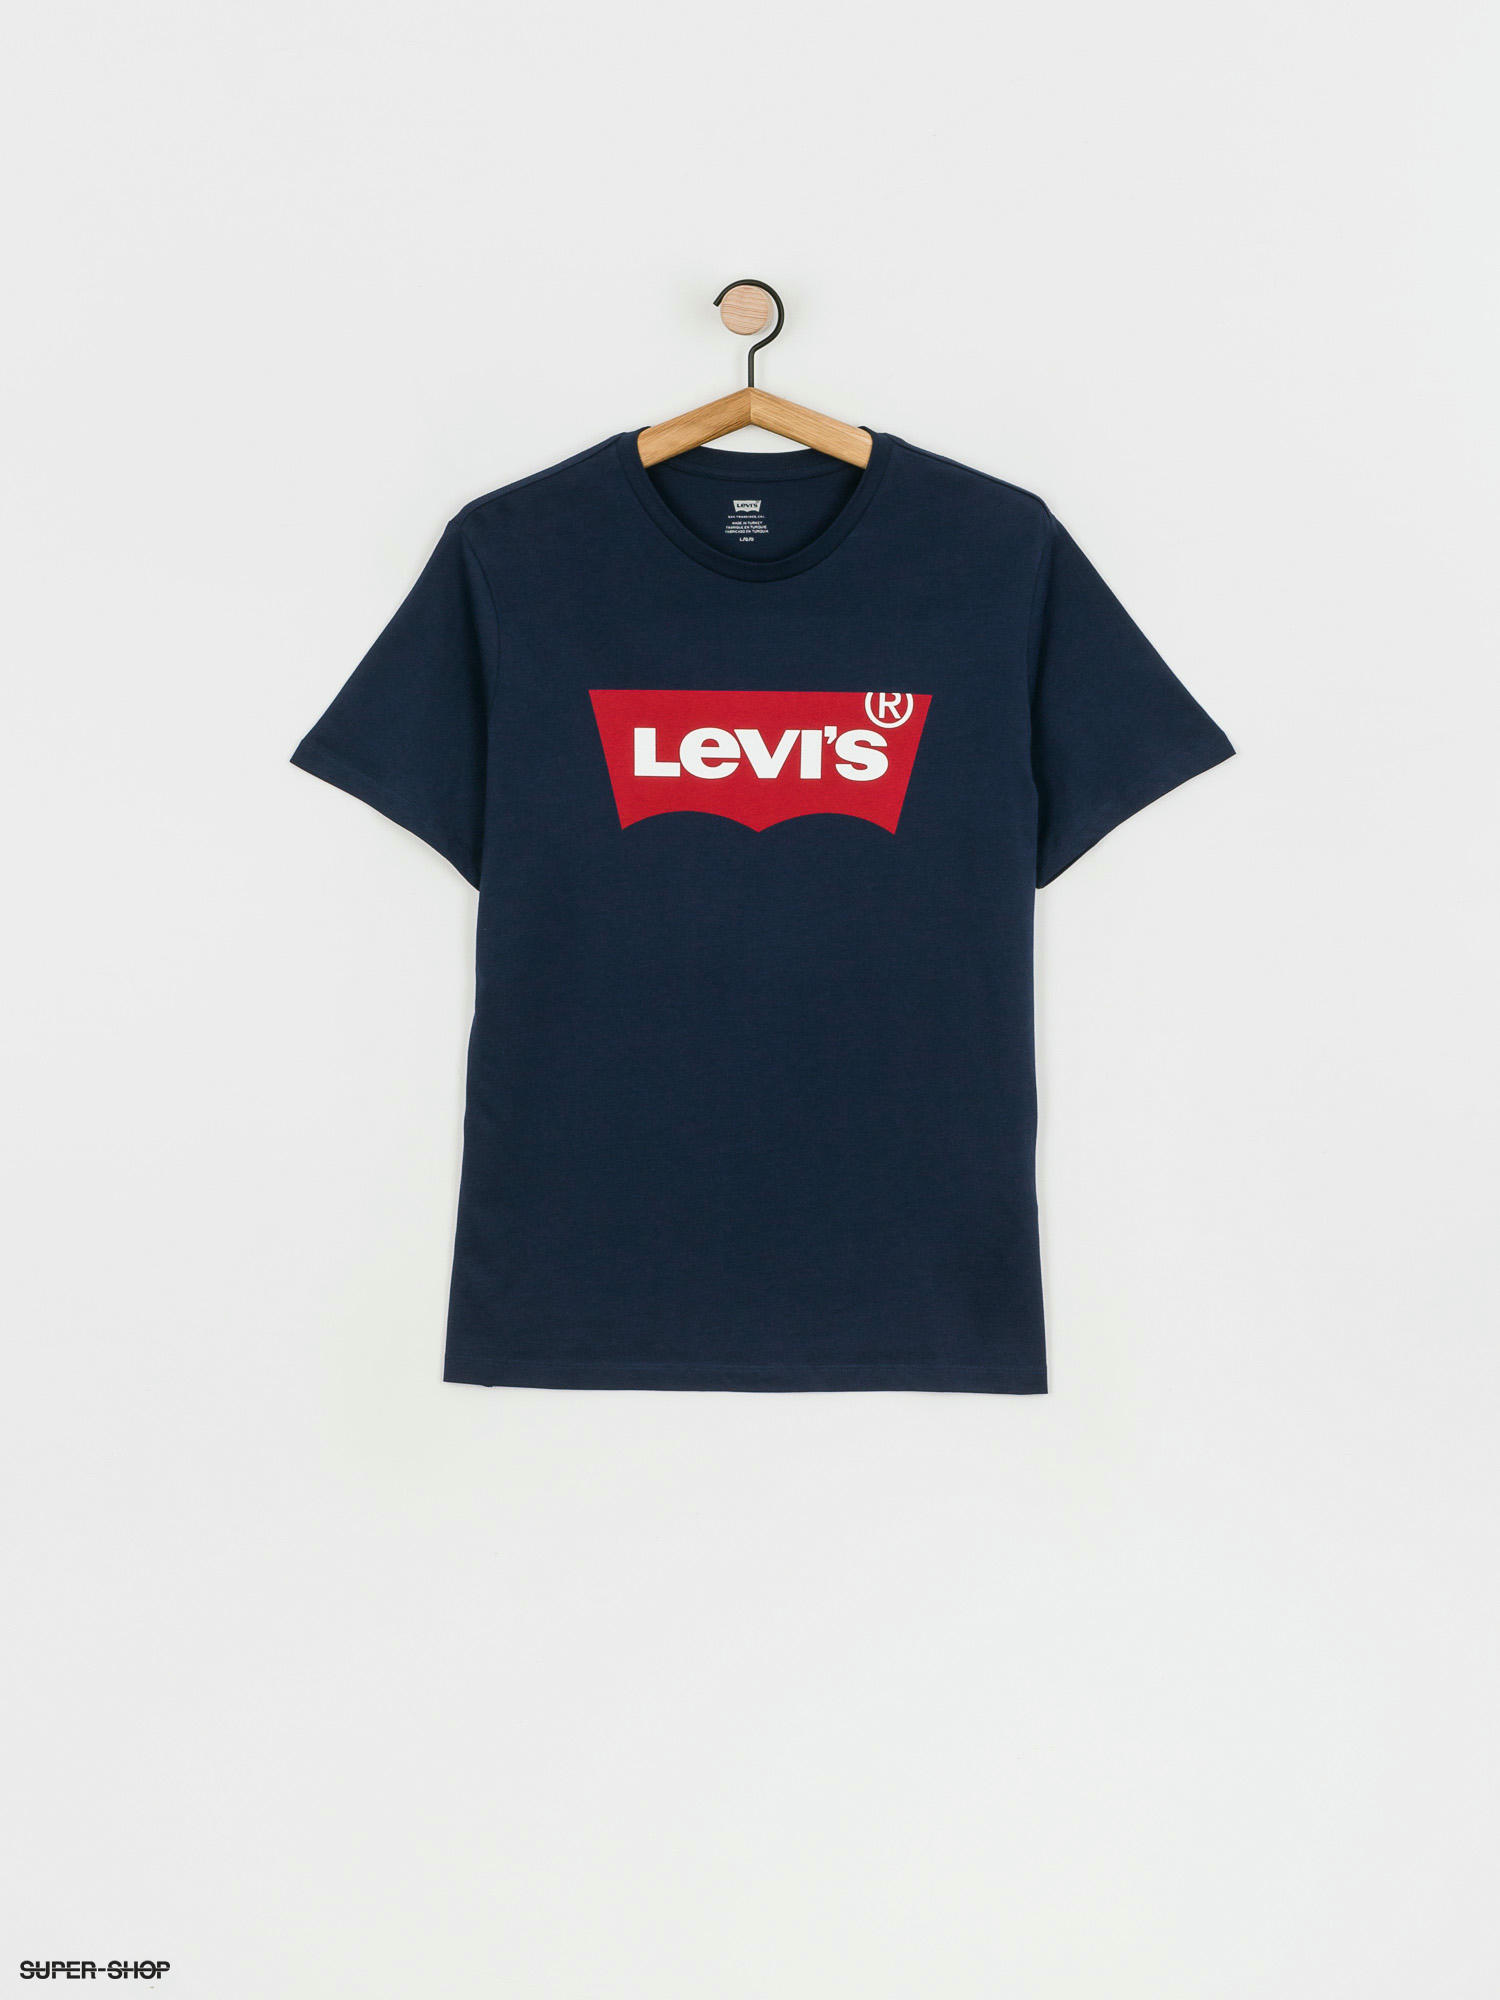 levis t shirt cost